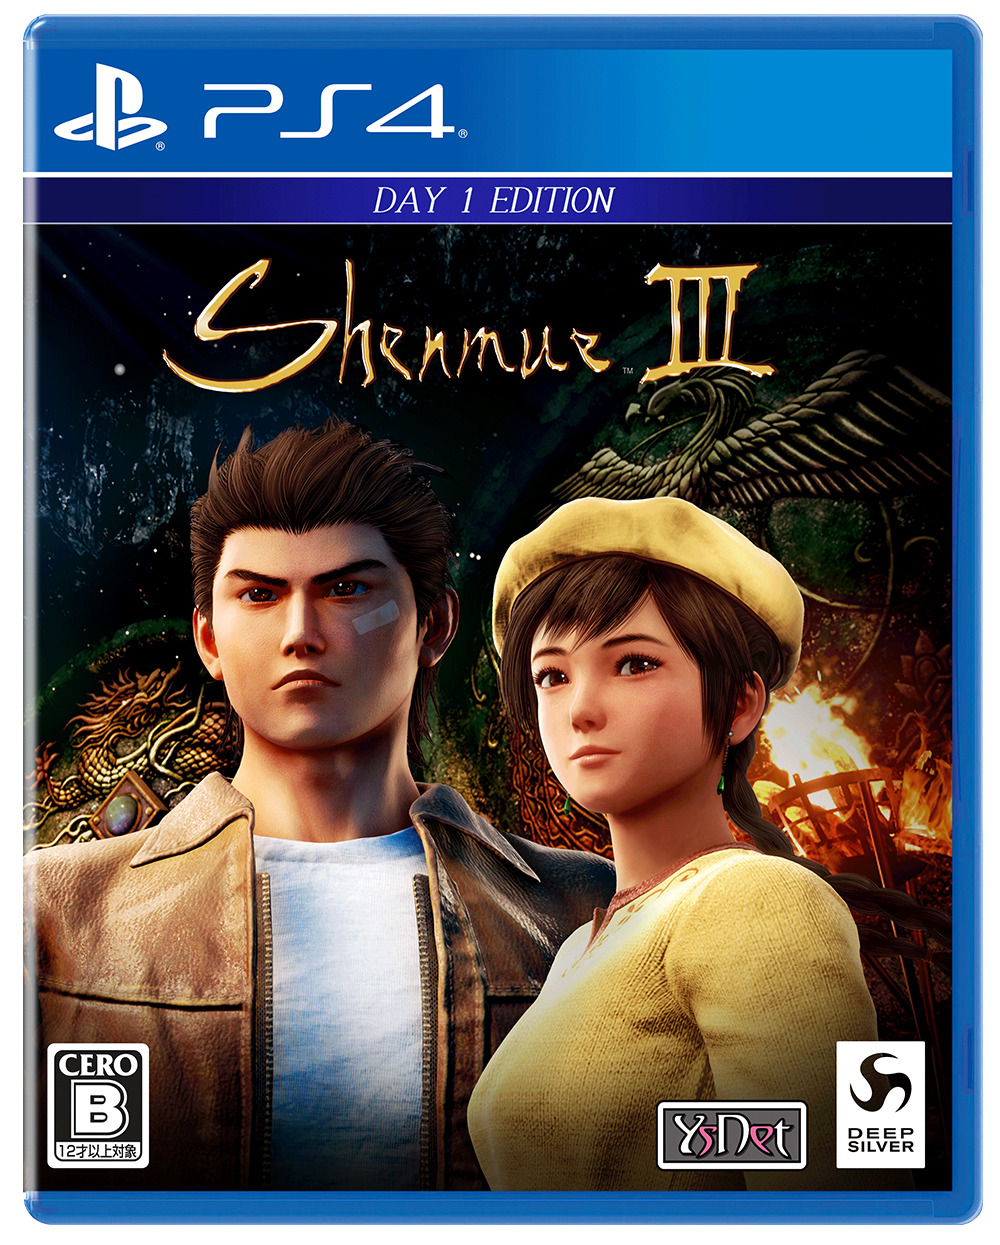 PS4『シェンムーIII - リテールDay1エディション』11月19日に発売決定